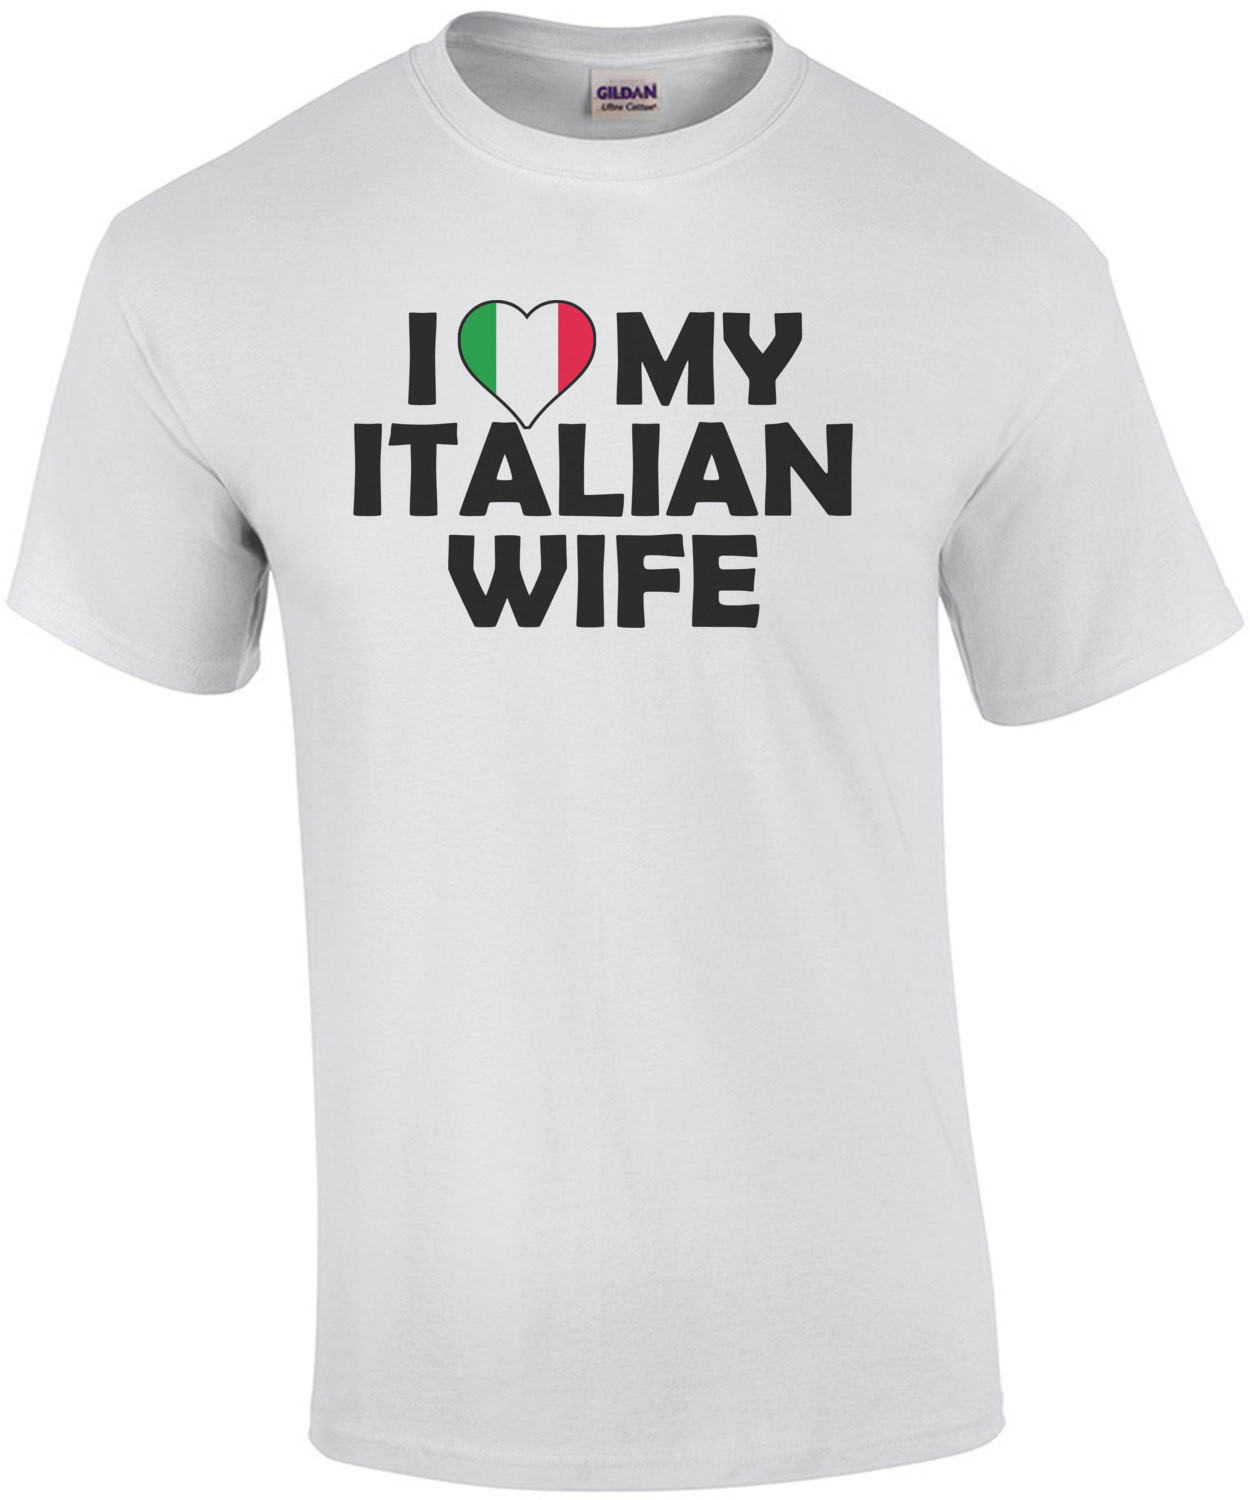 I Love My Italian Wife T-Shirt